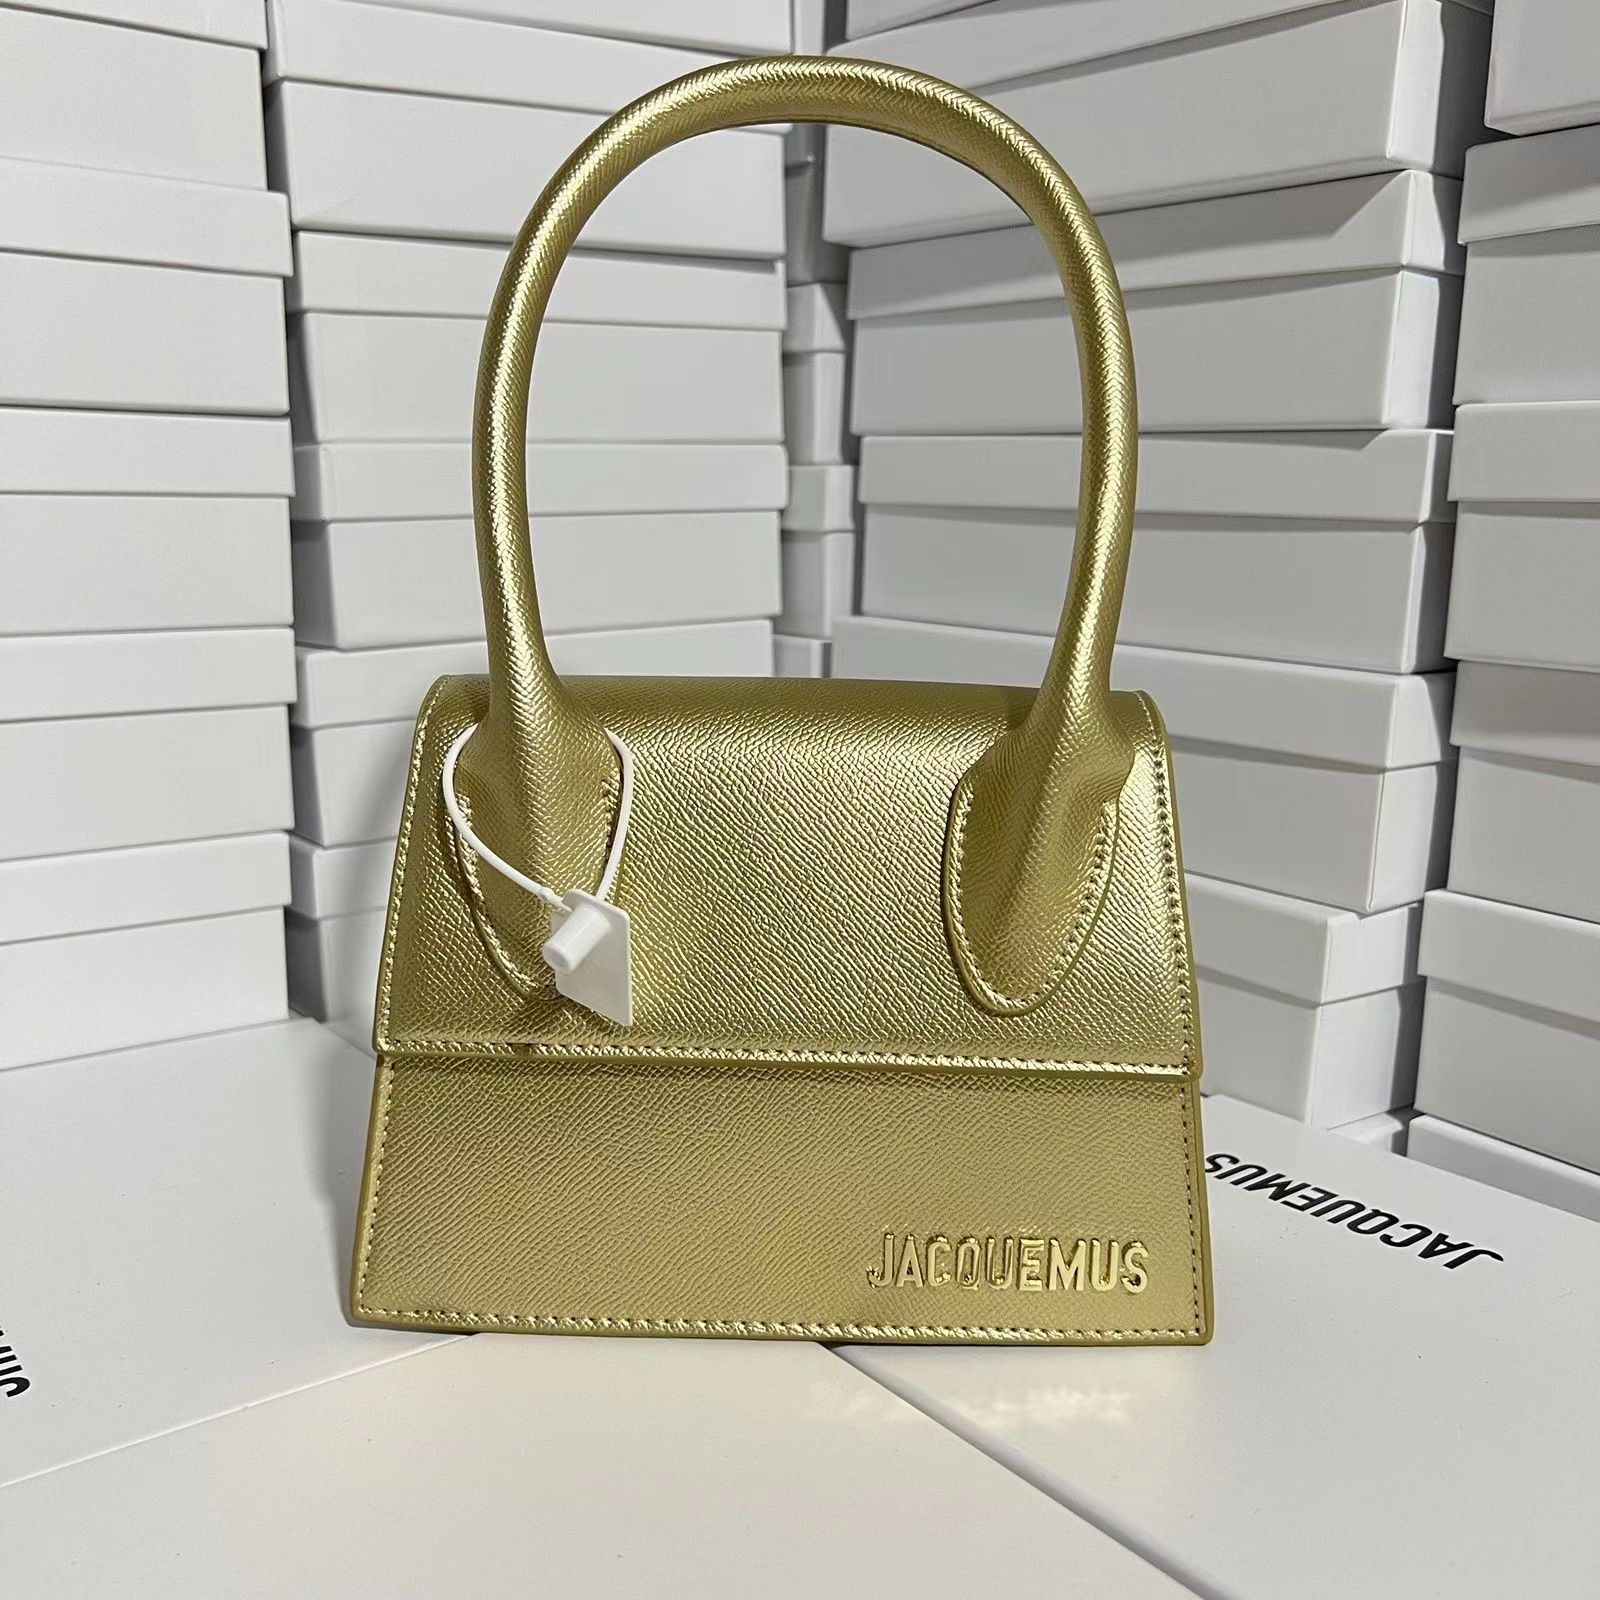 JACQUEMUS Golden Handbag 20cm